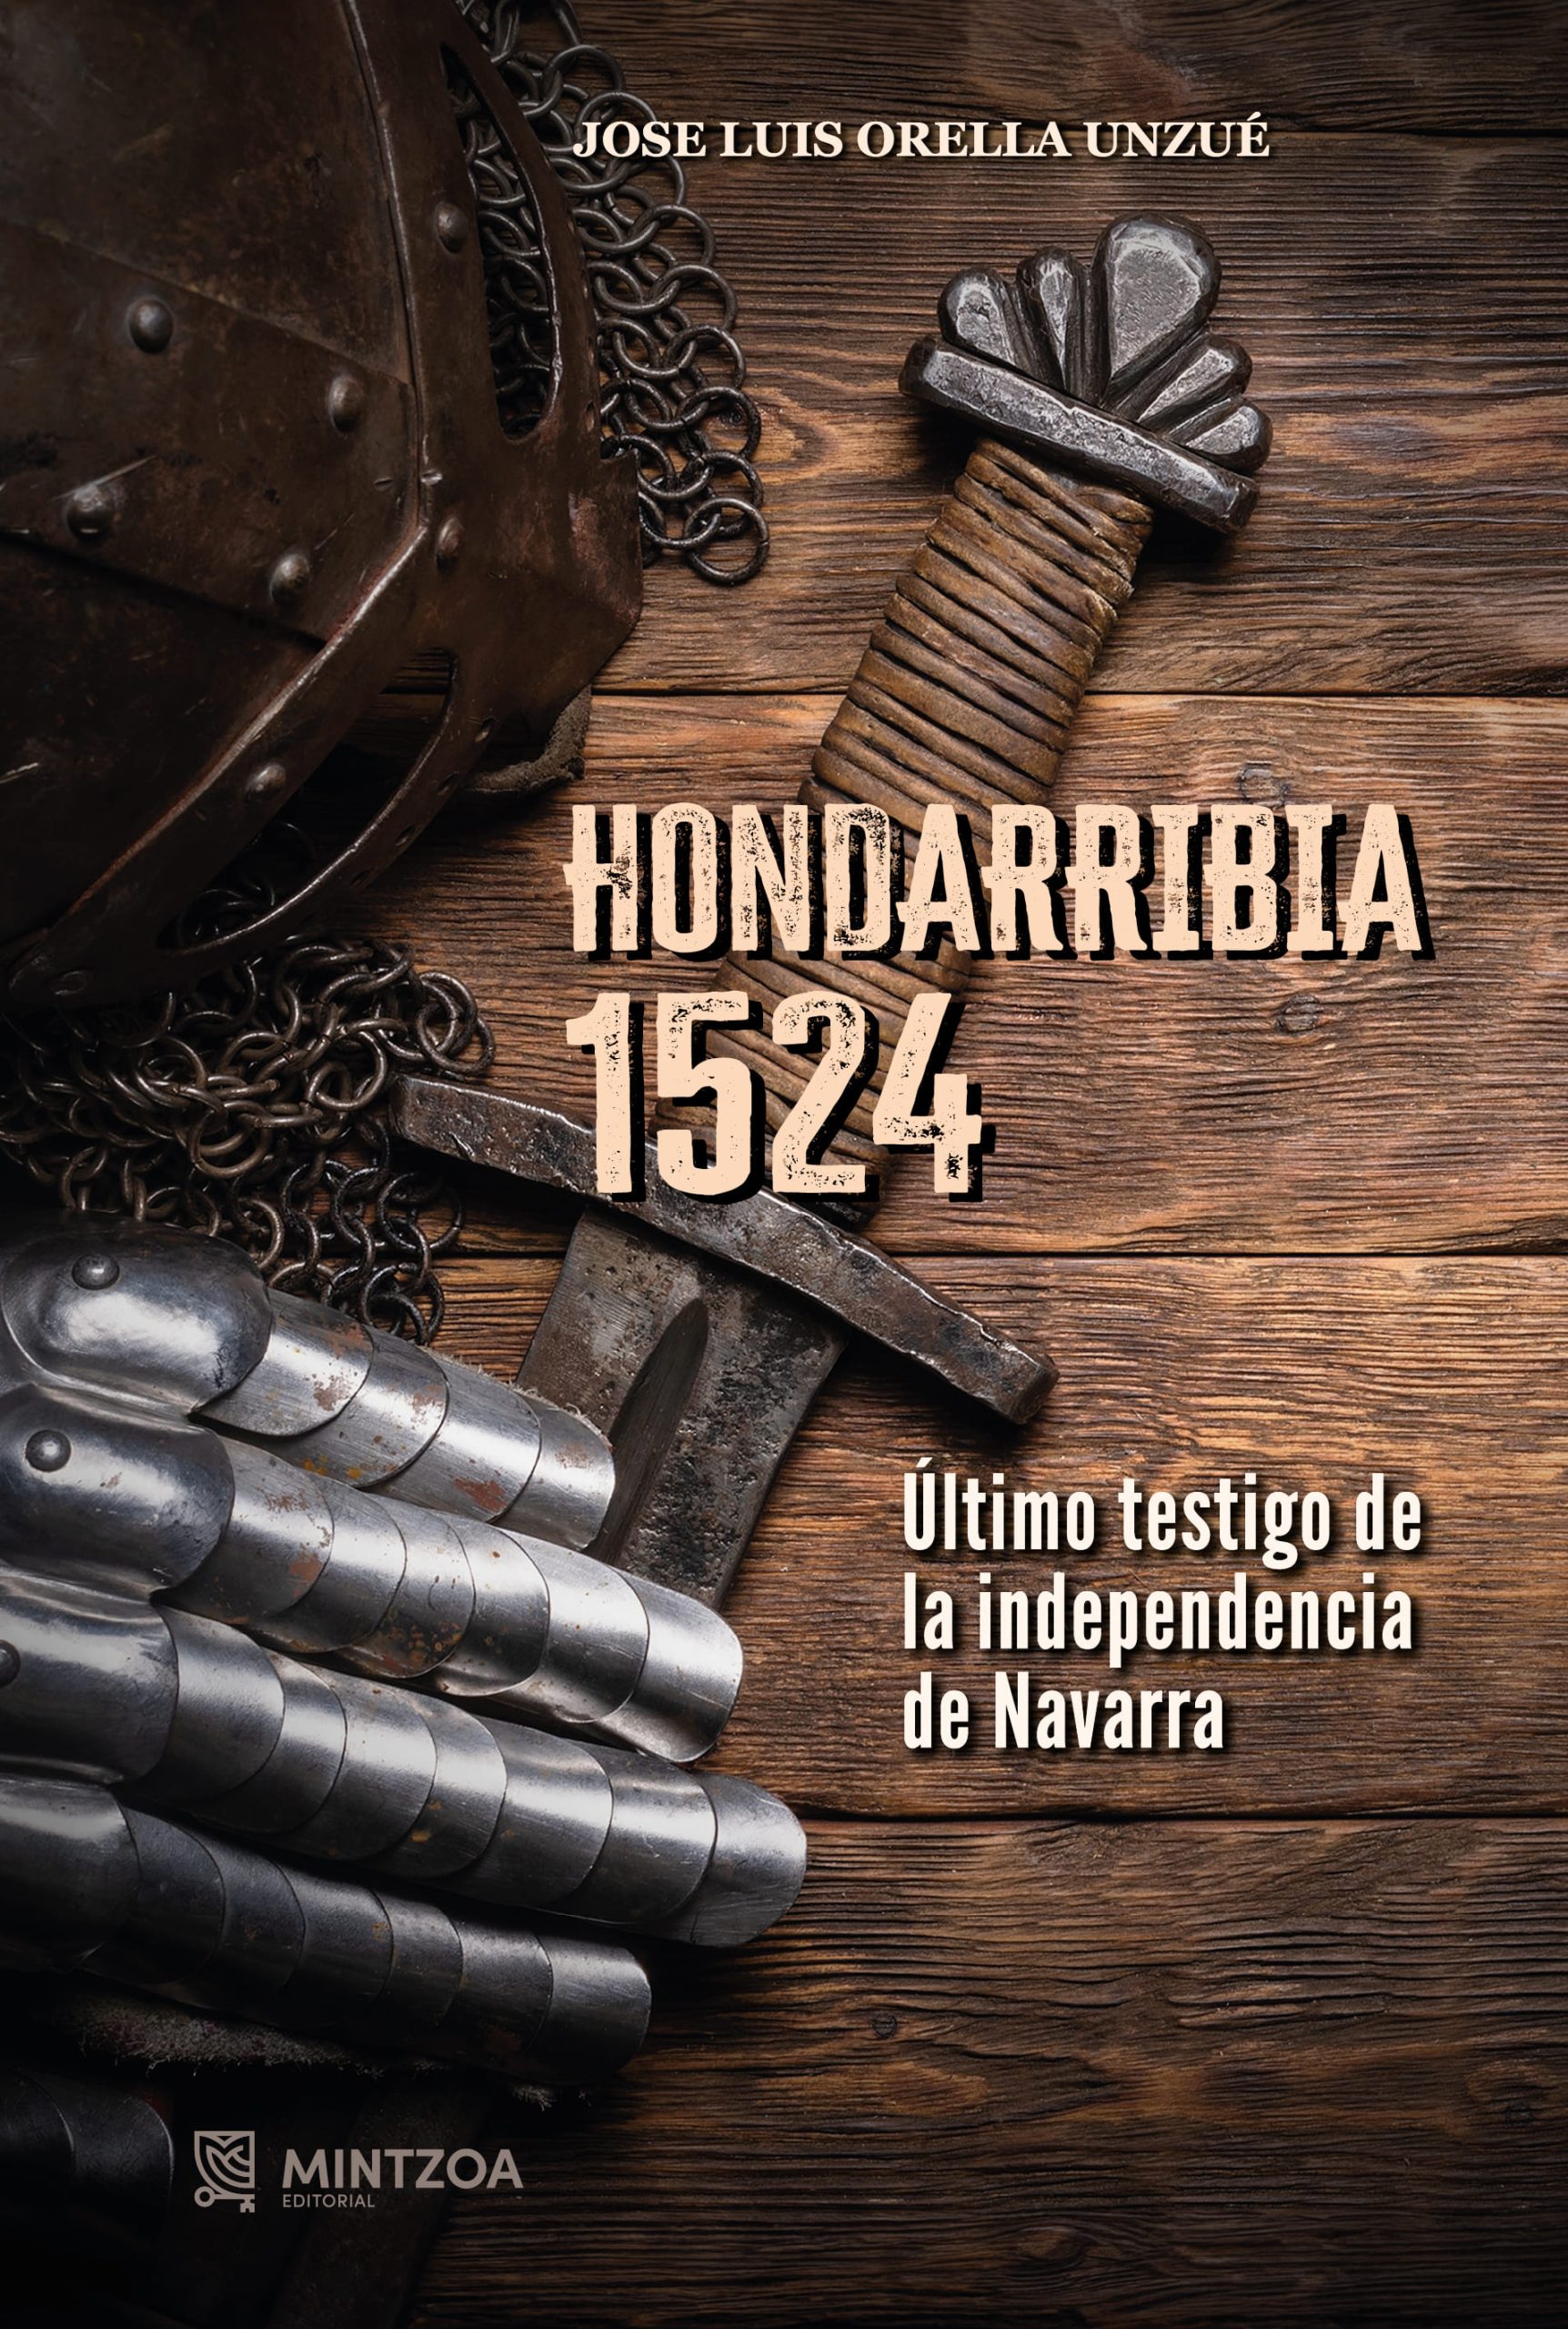 HONDARRIBIA 1524. Último testigo de la independencia de Navarra